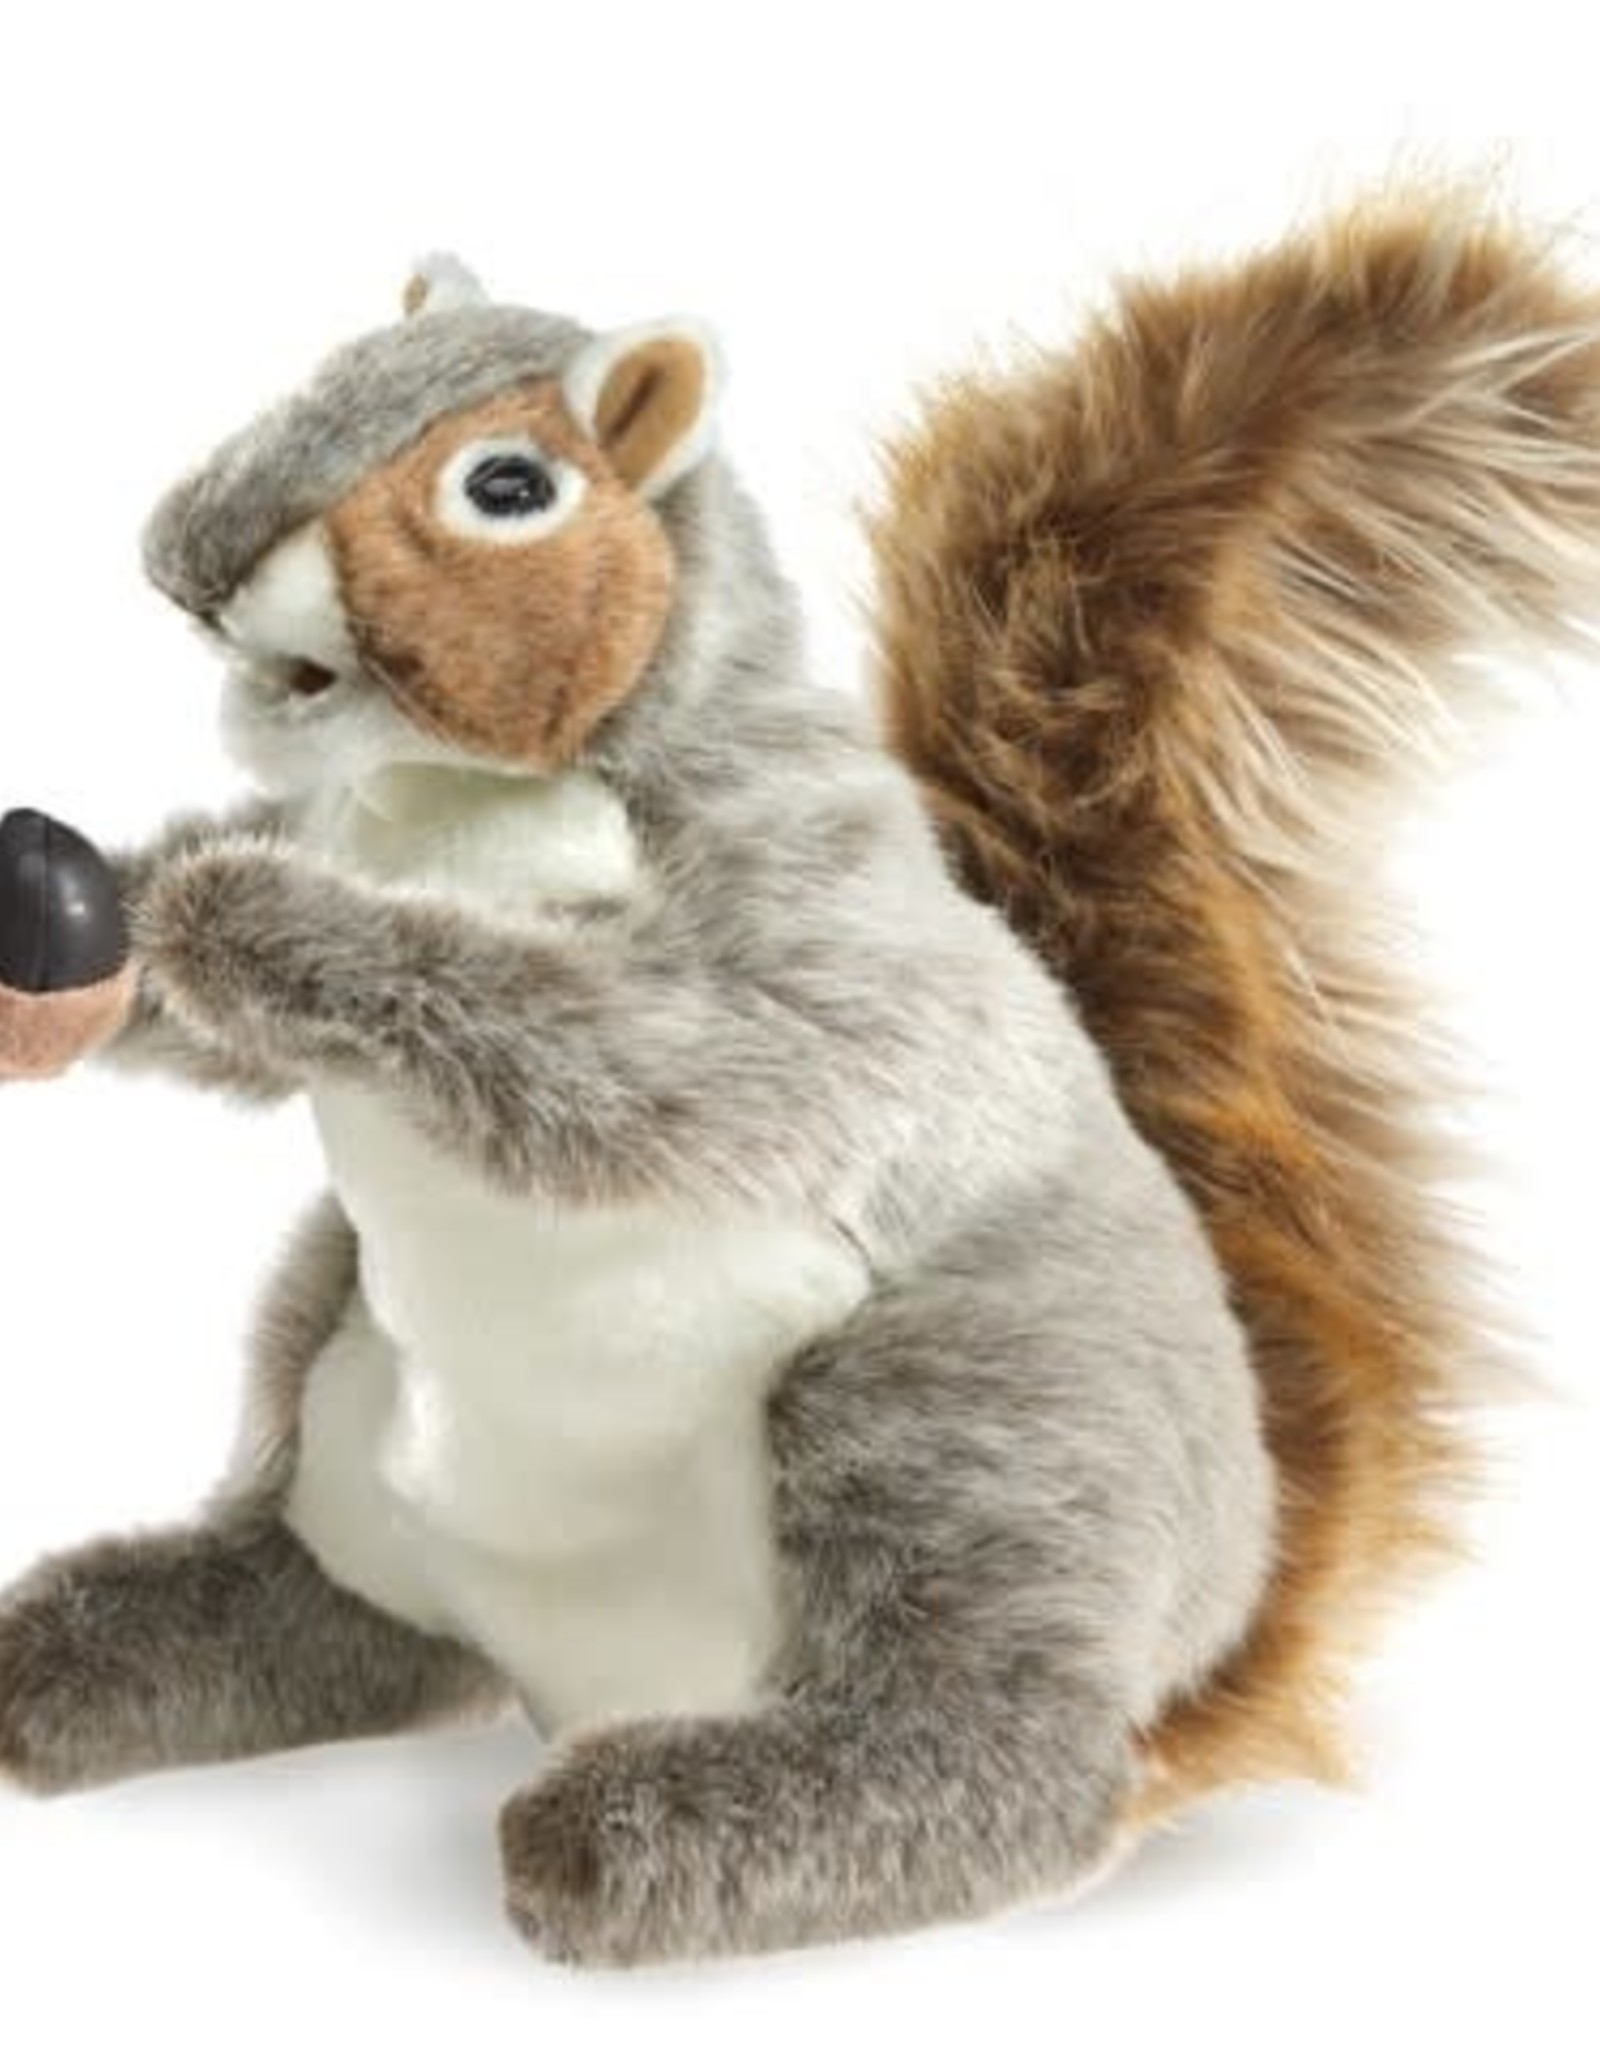 FOLKMANIS Gray Squirrel Puppet